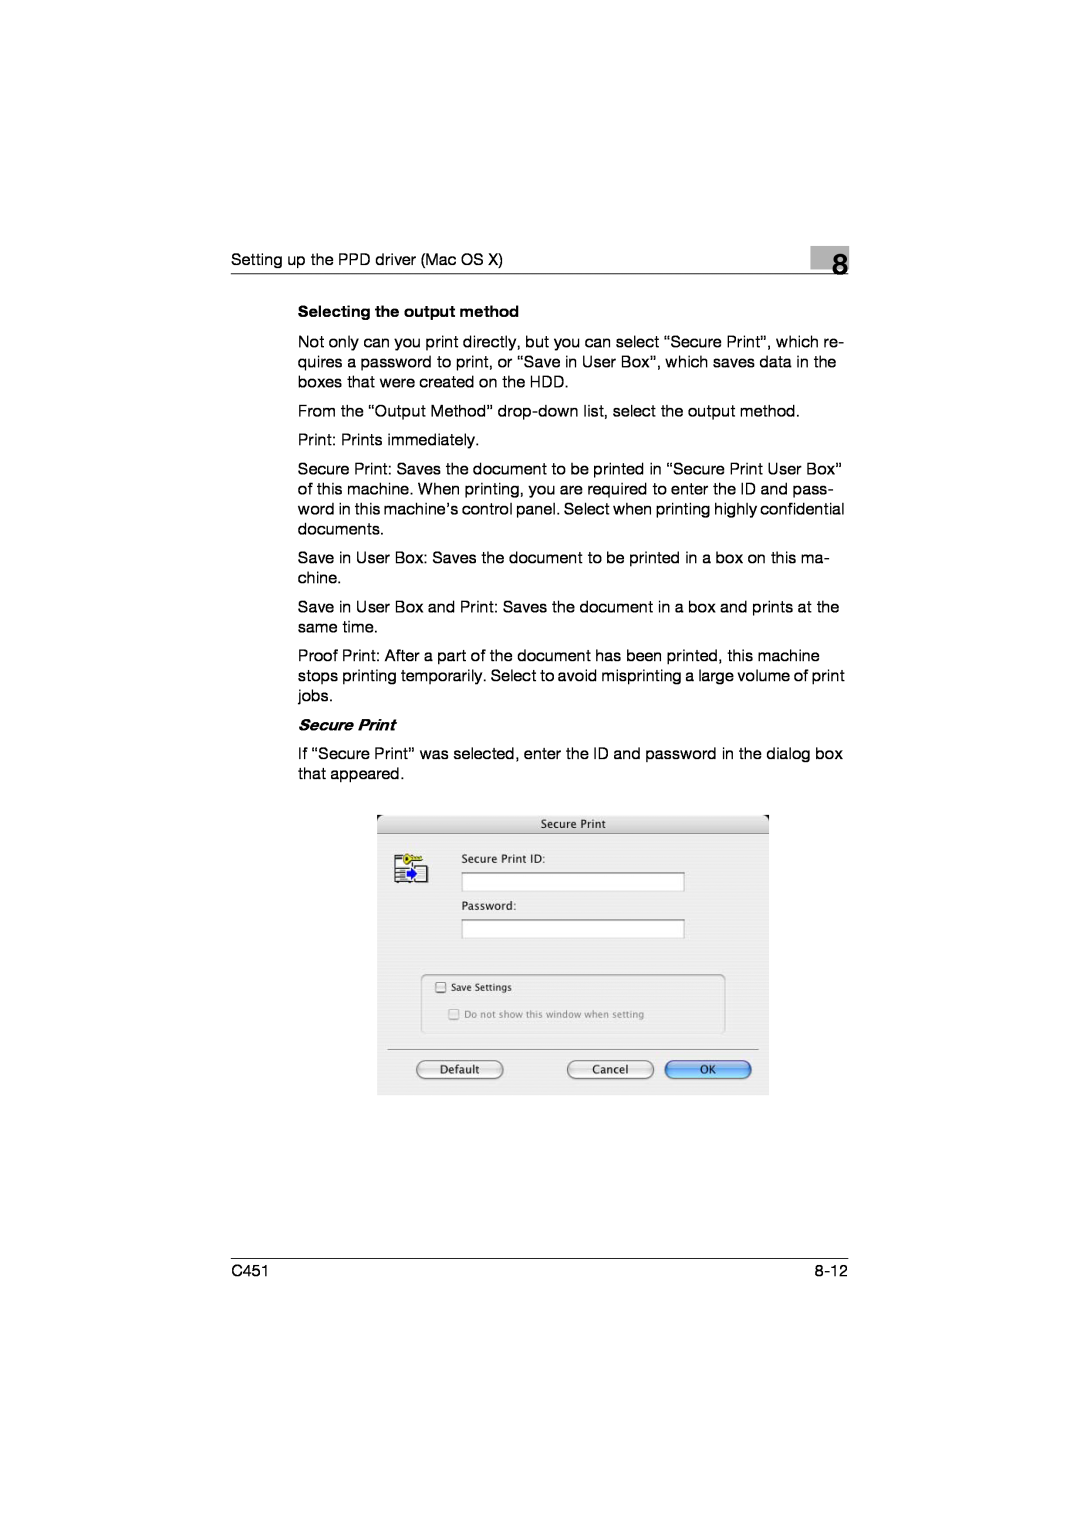 Konica Minolta C451 manual Setting up the PPD driver Mac OS, Secure Print 